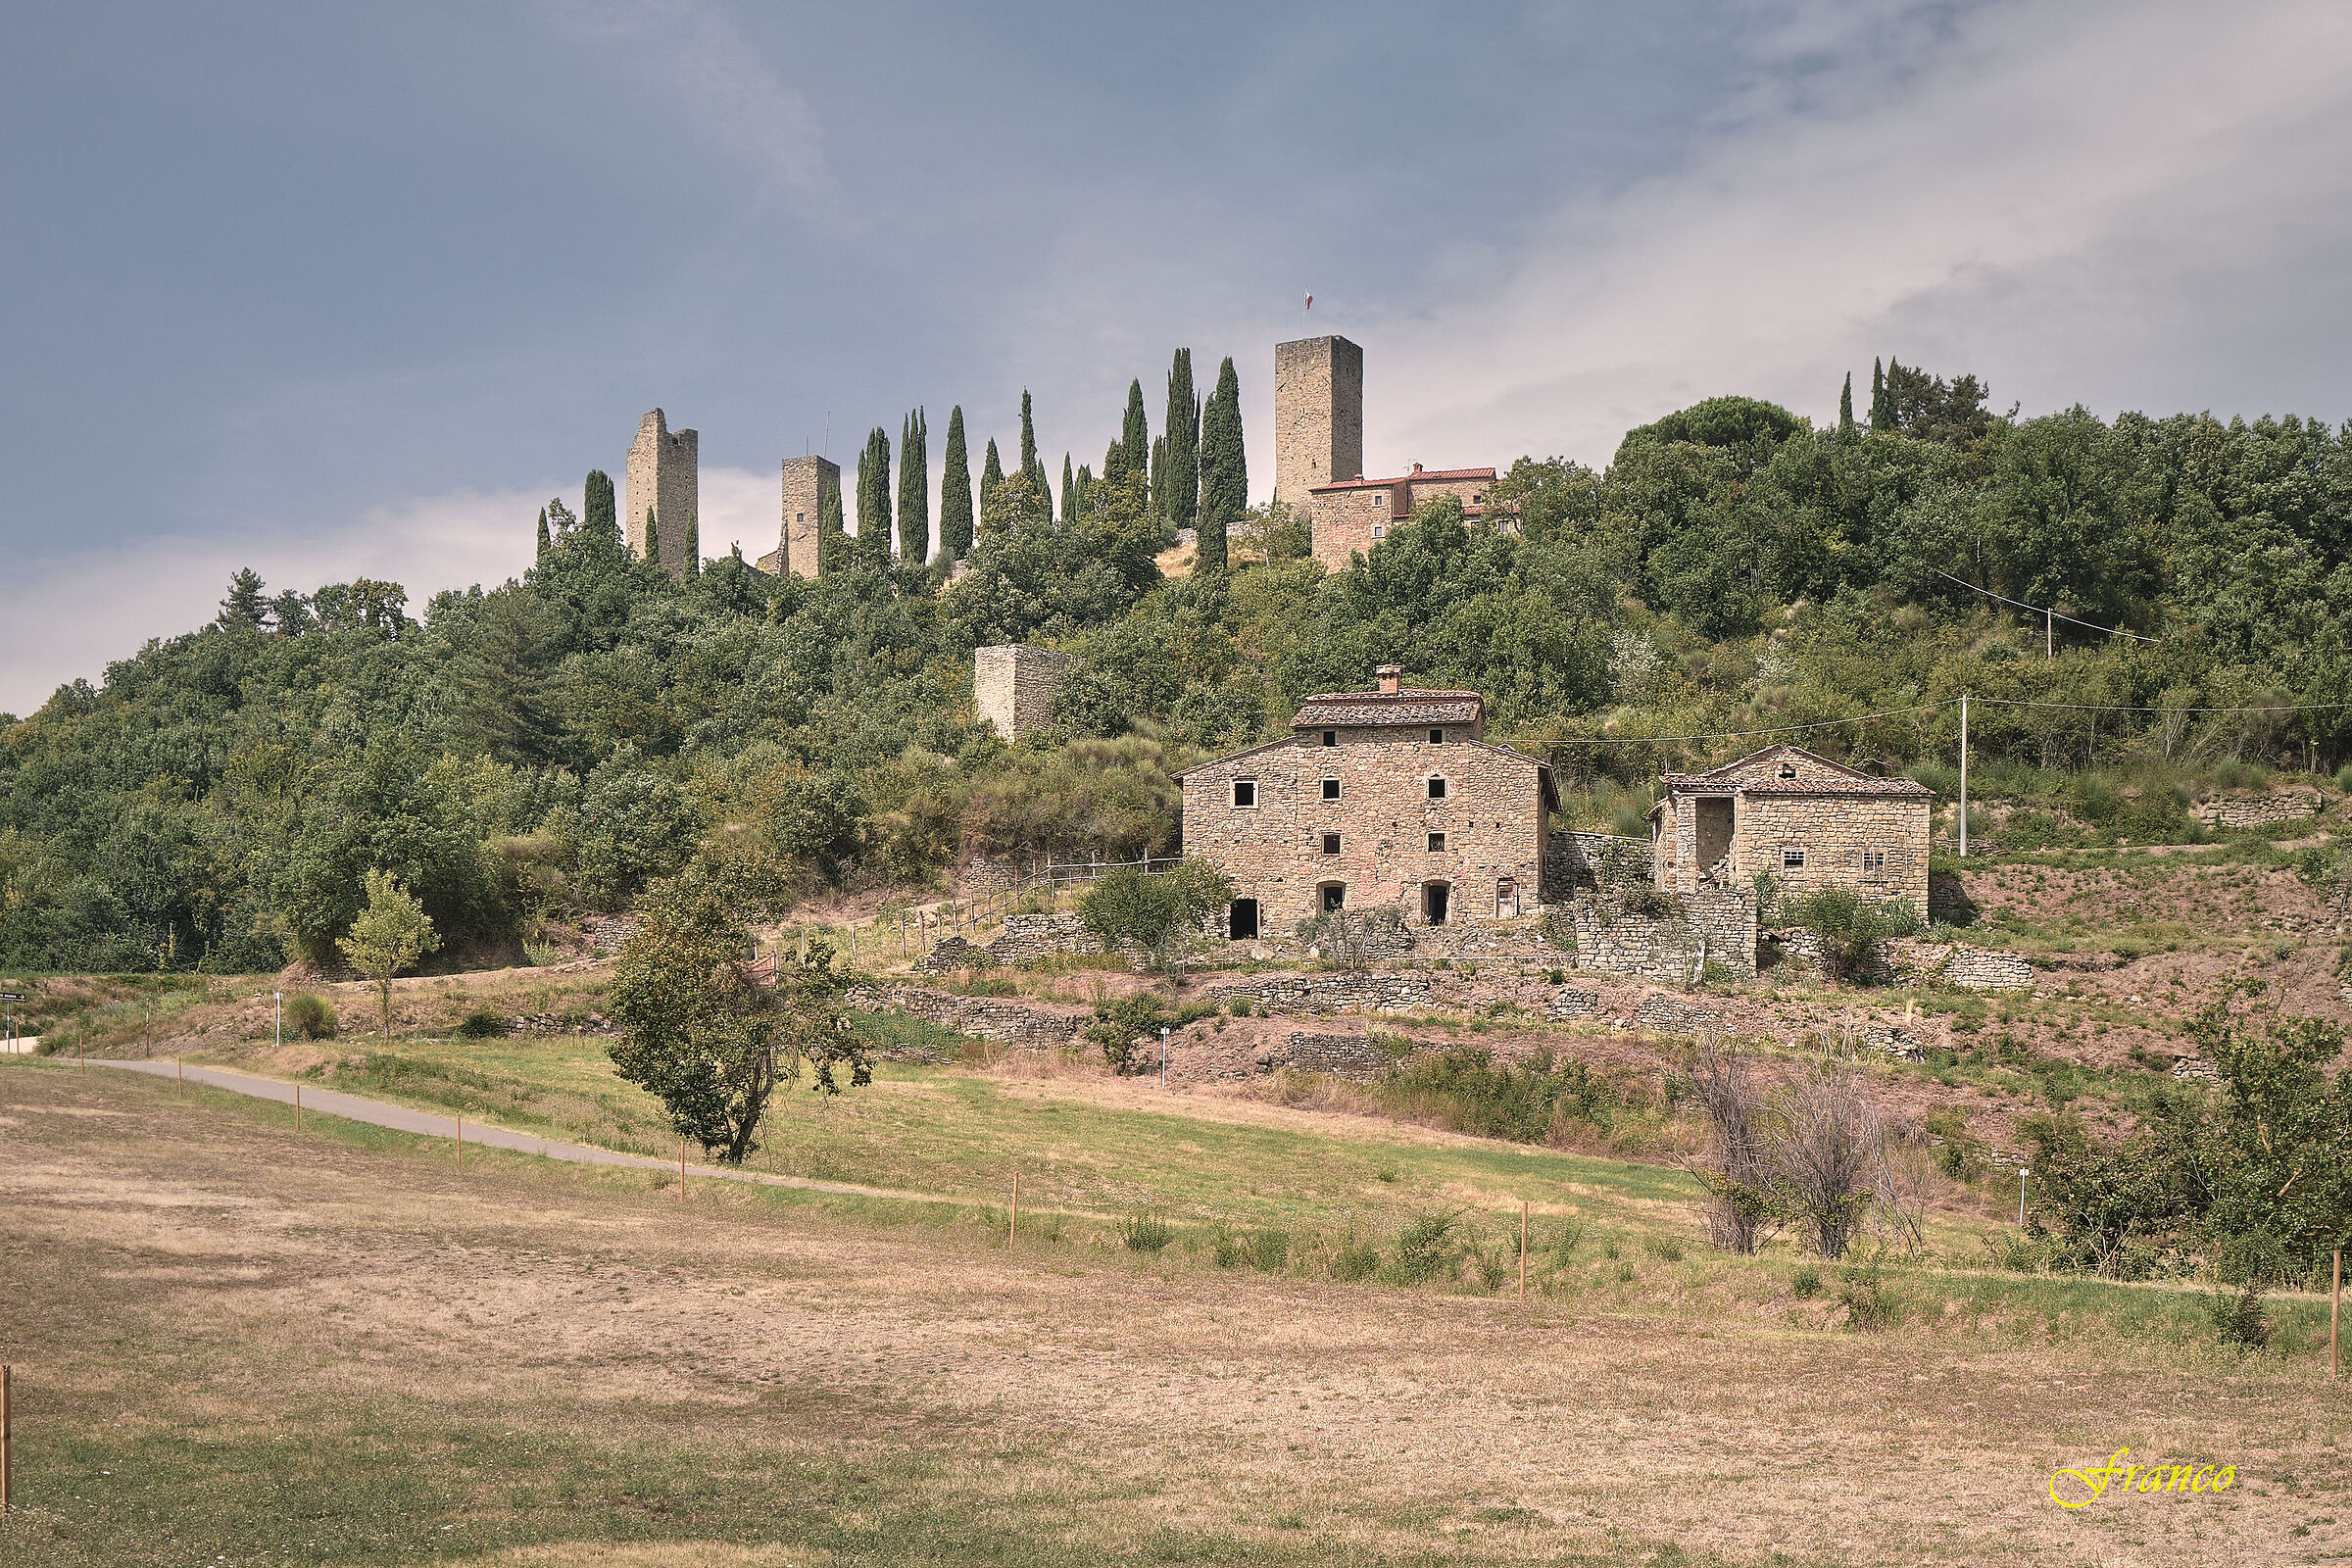 The Castle of Romena...